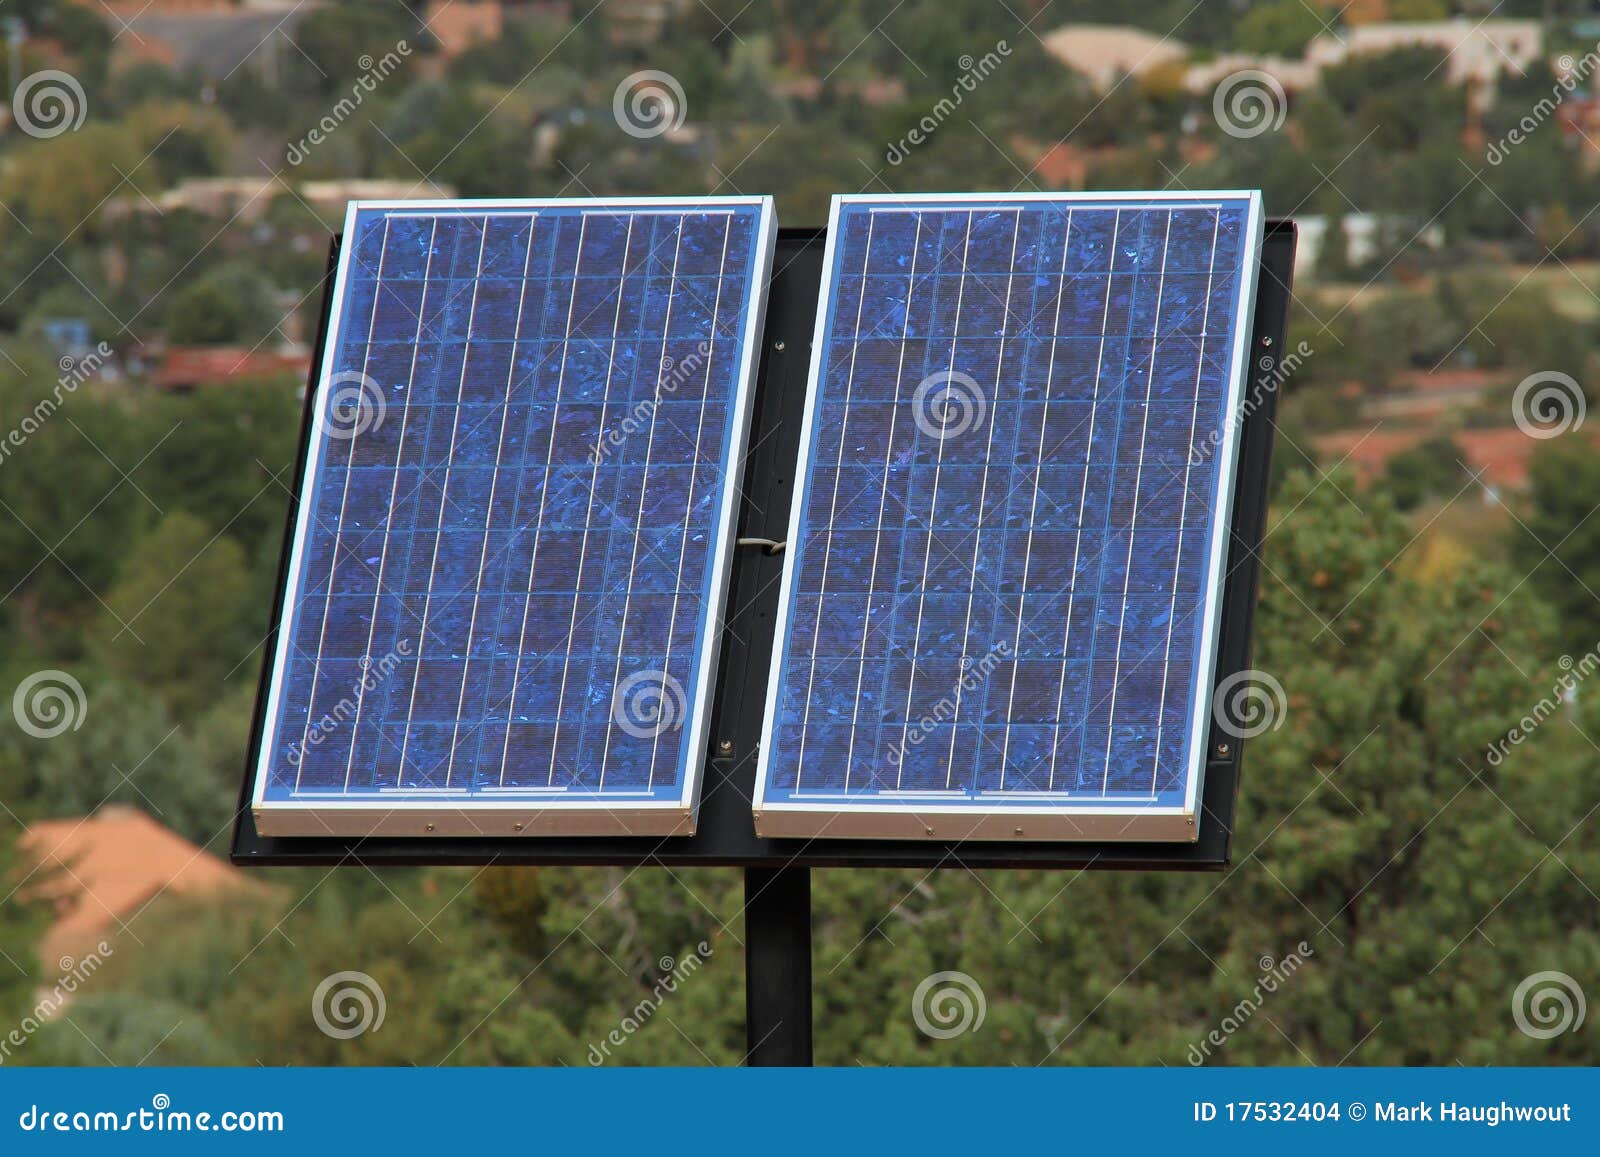 solar panel freestanding